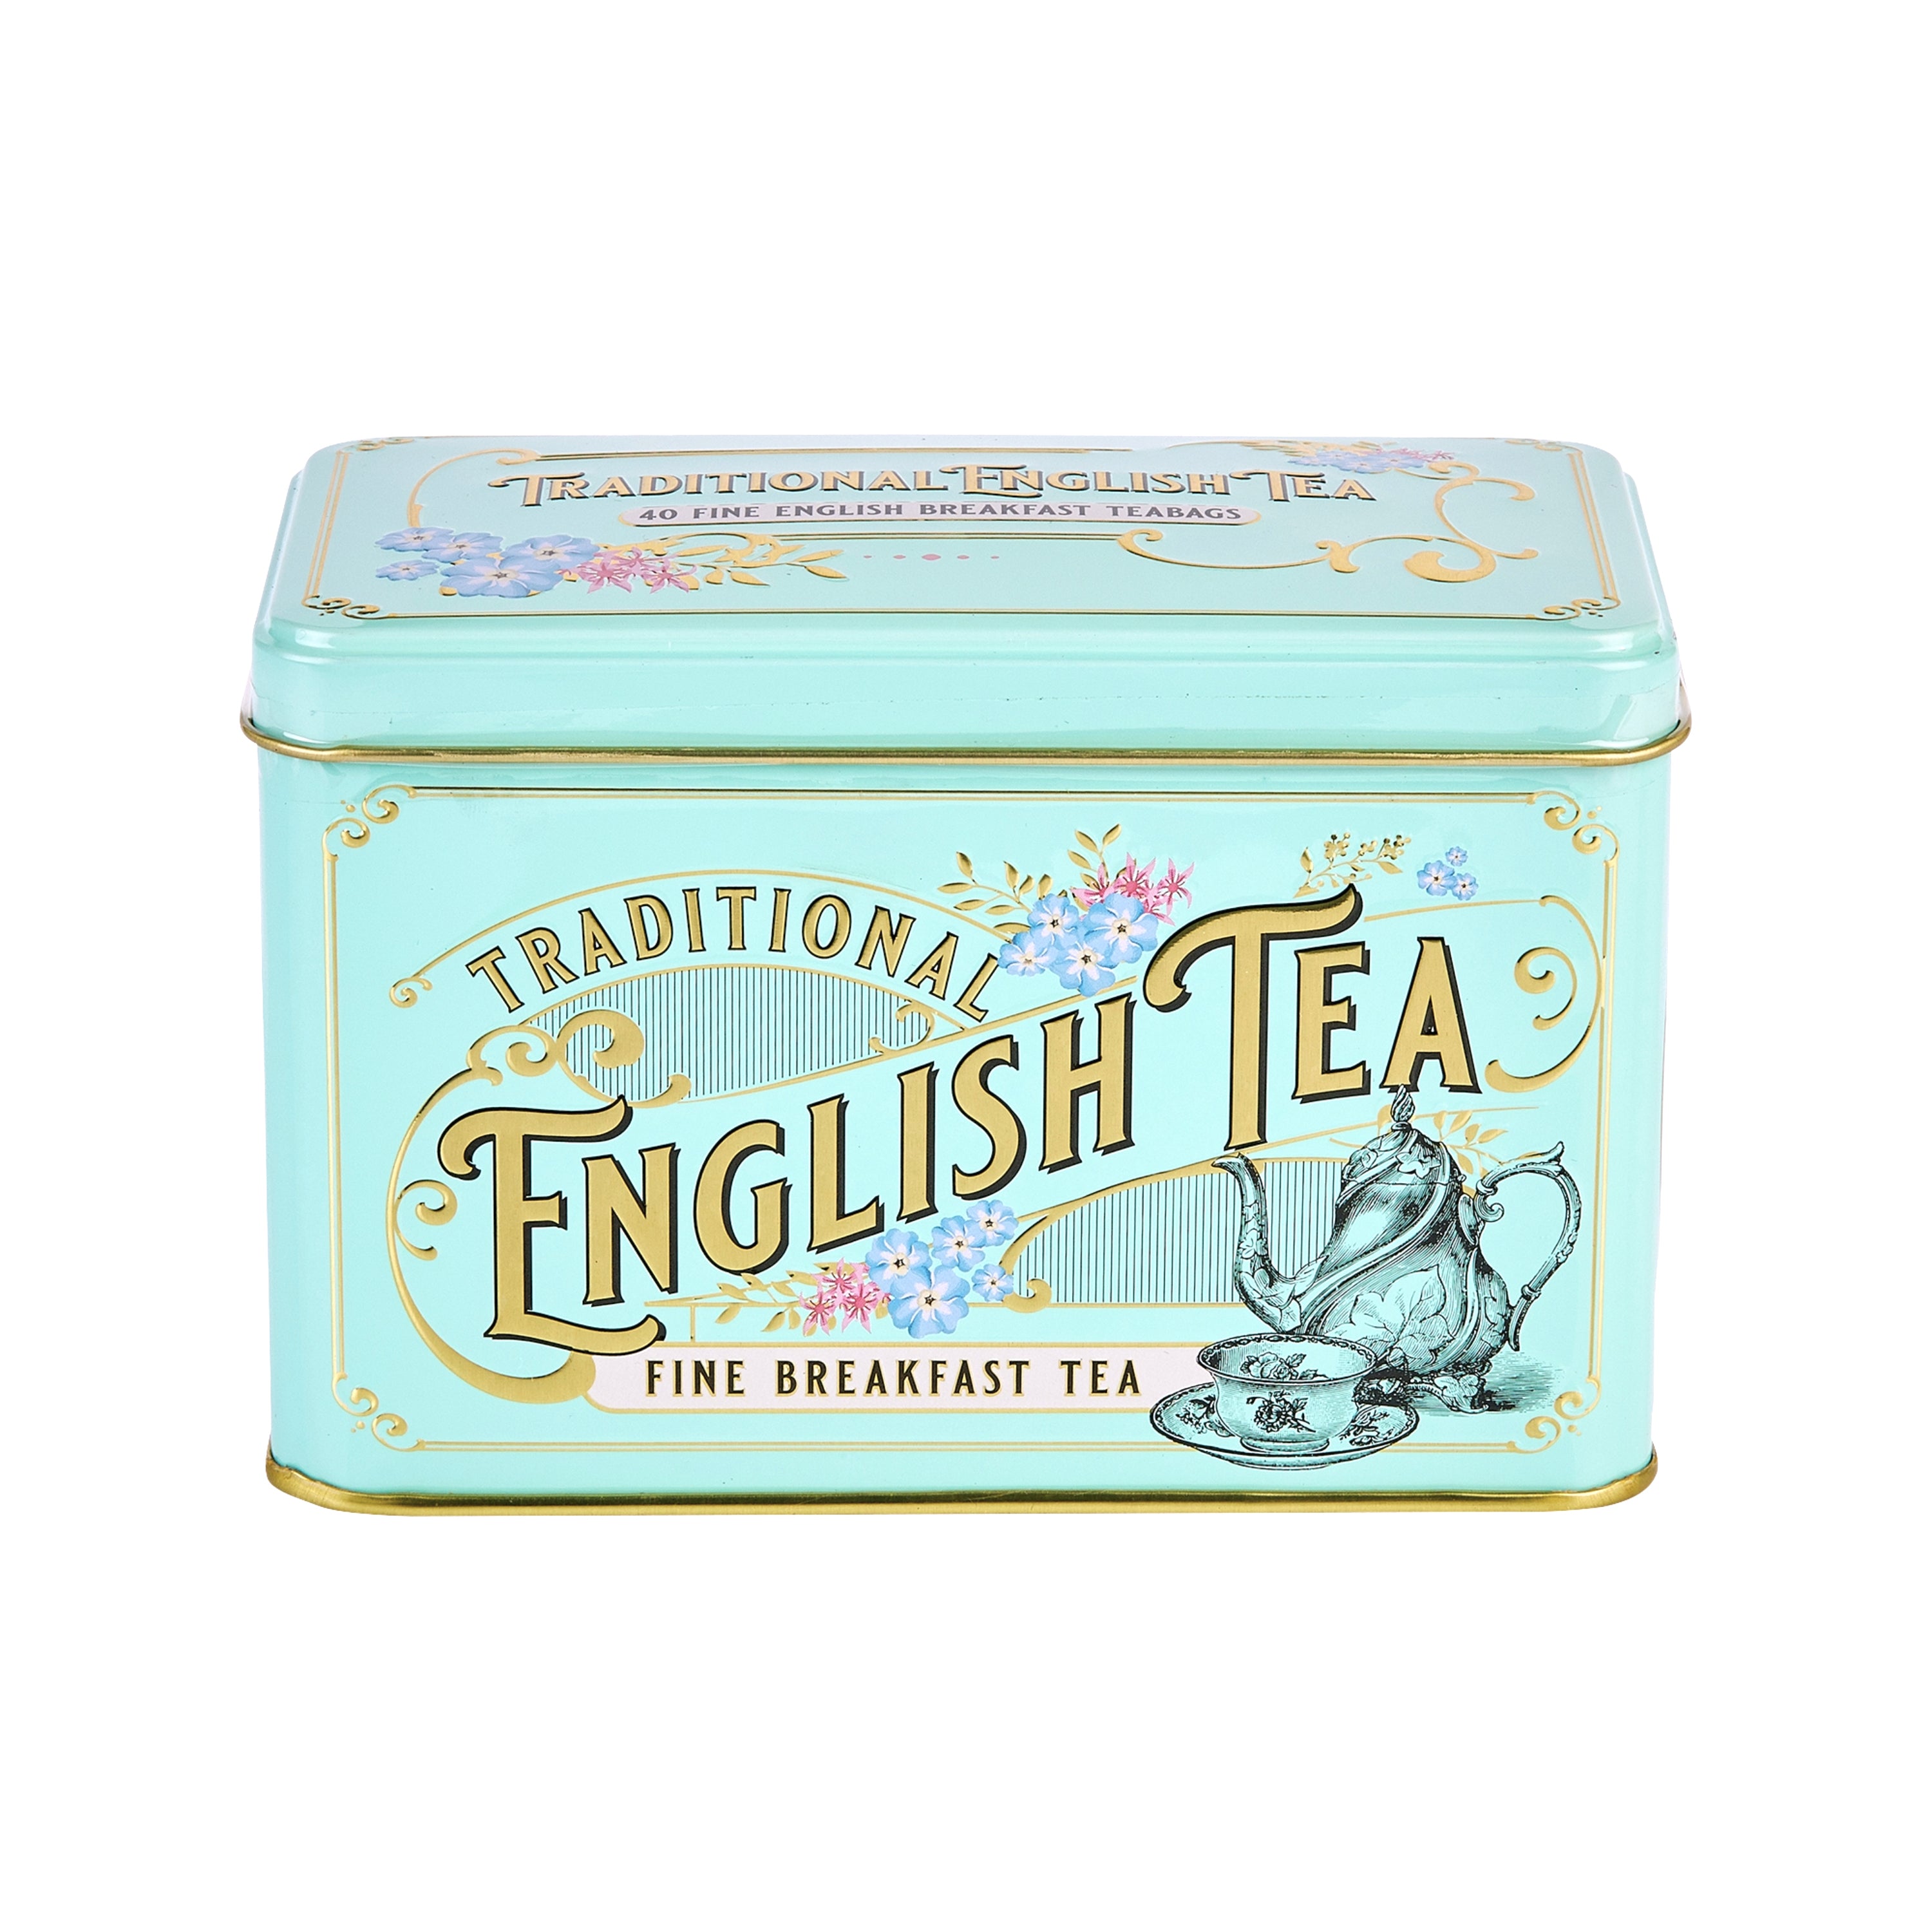 Mint Green Vintage Victorian Tea Tin With 40 English Breakfast Teabags Tea Tins New English Teas 